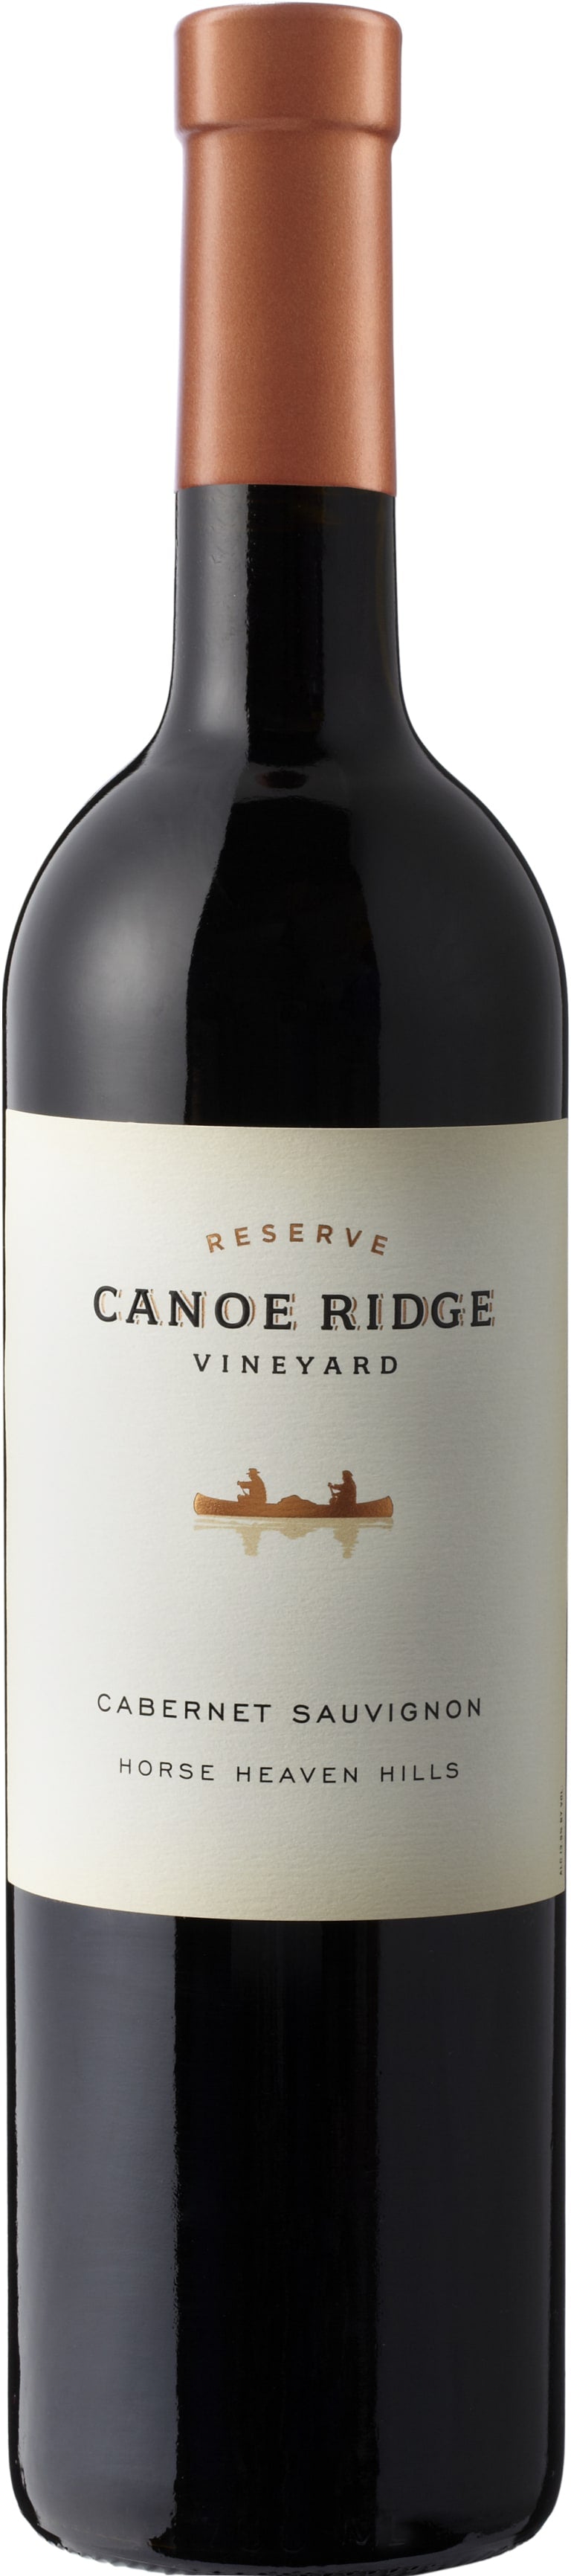 Canoe Ridge Cabernet Sauvignon Reserve 2016